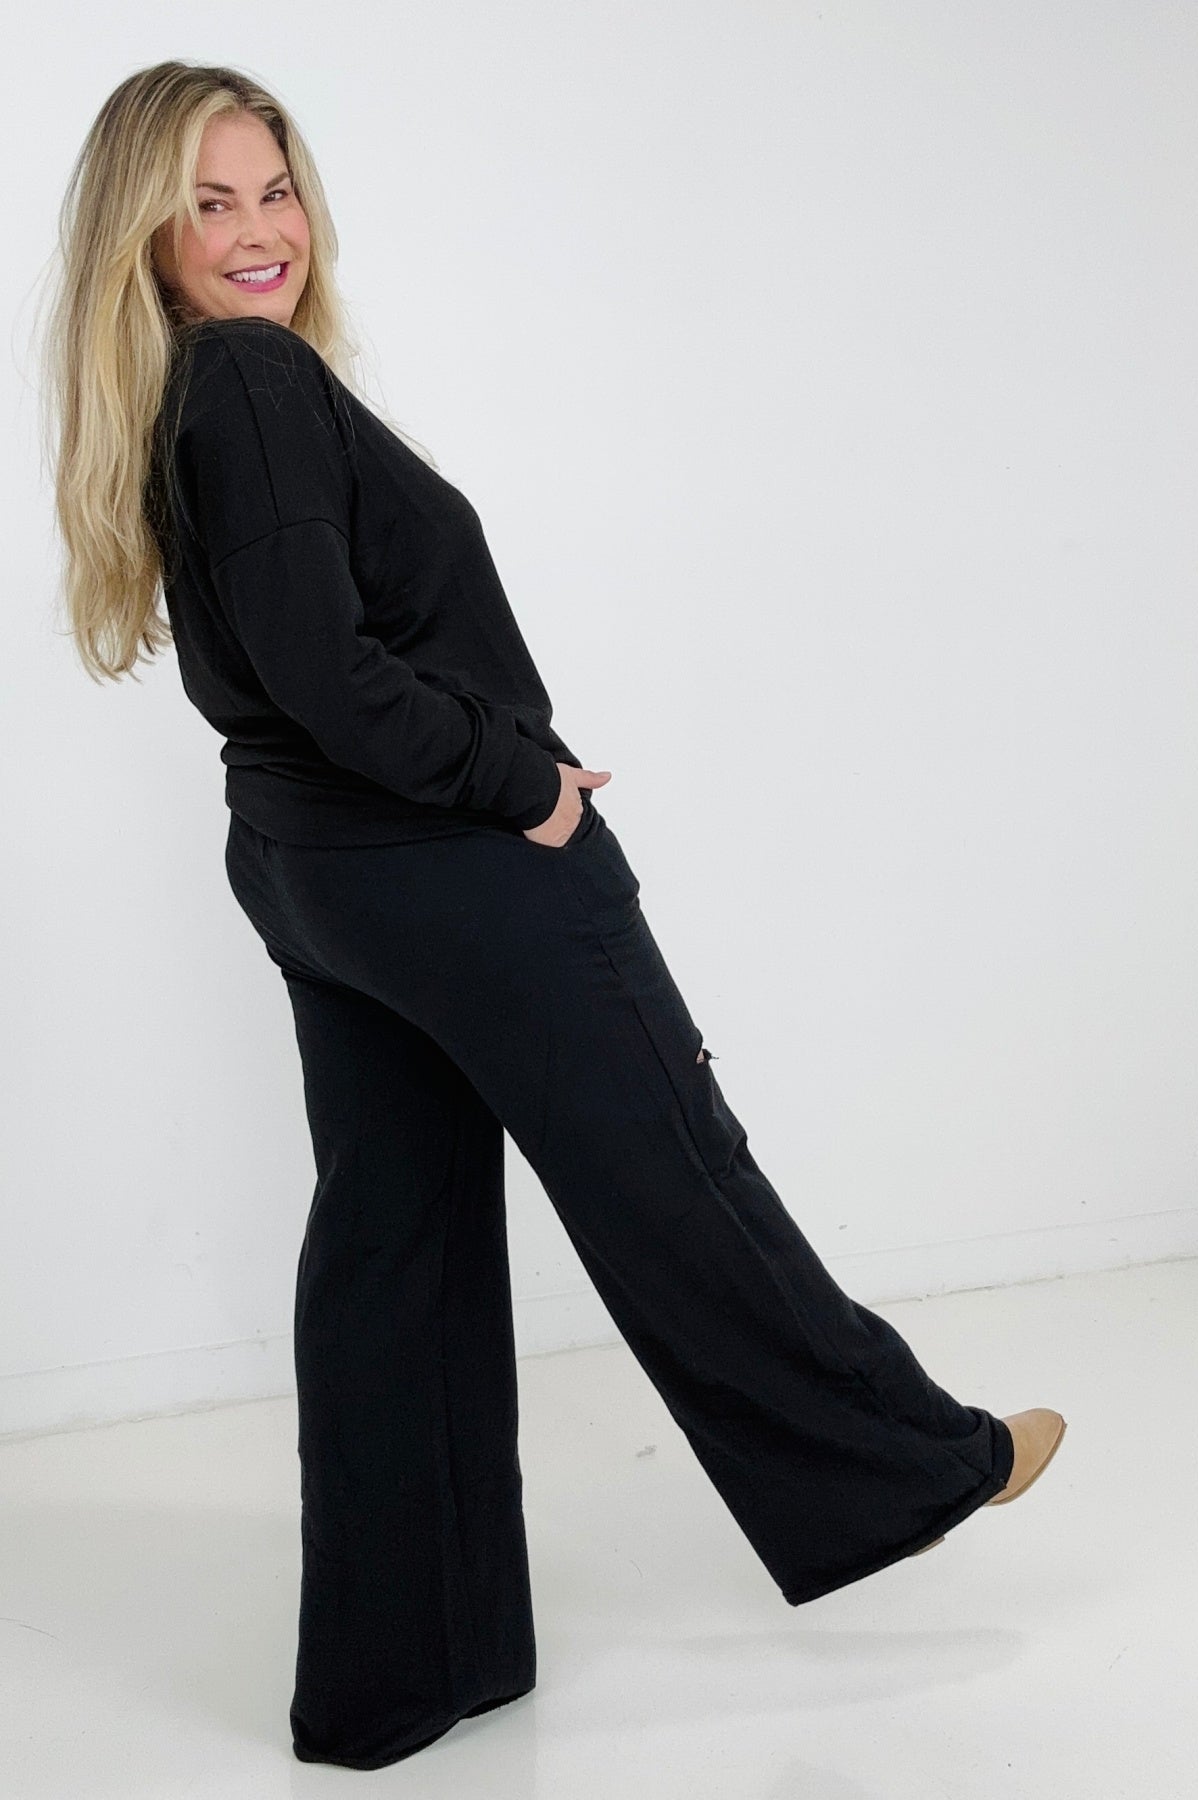 Zenana Distressed Knee French Terry Sweats With Pockets - New Colors Kiwidrop